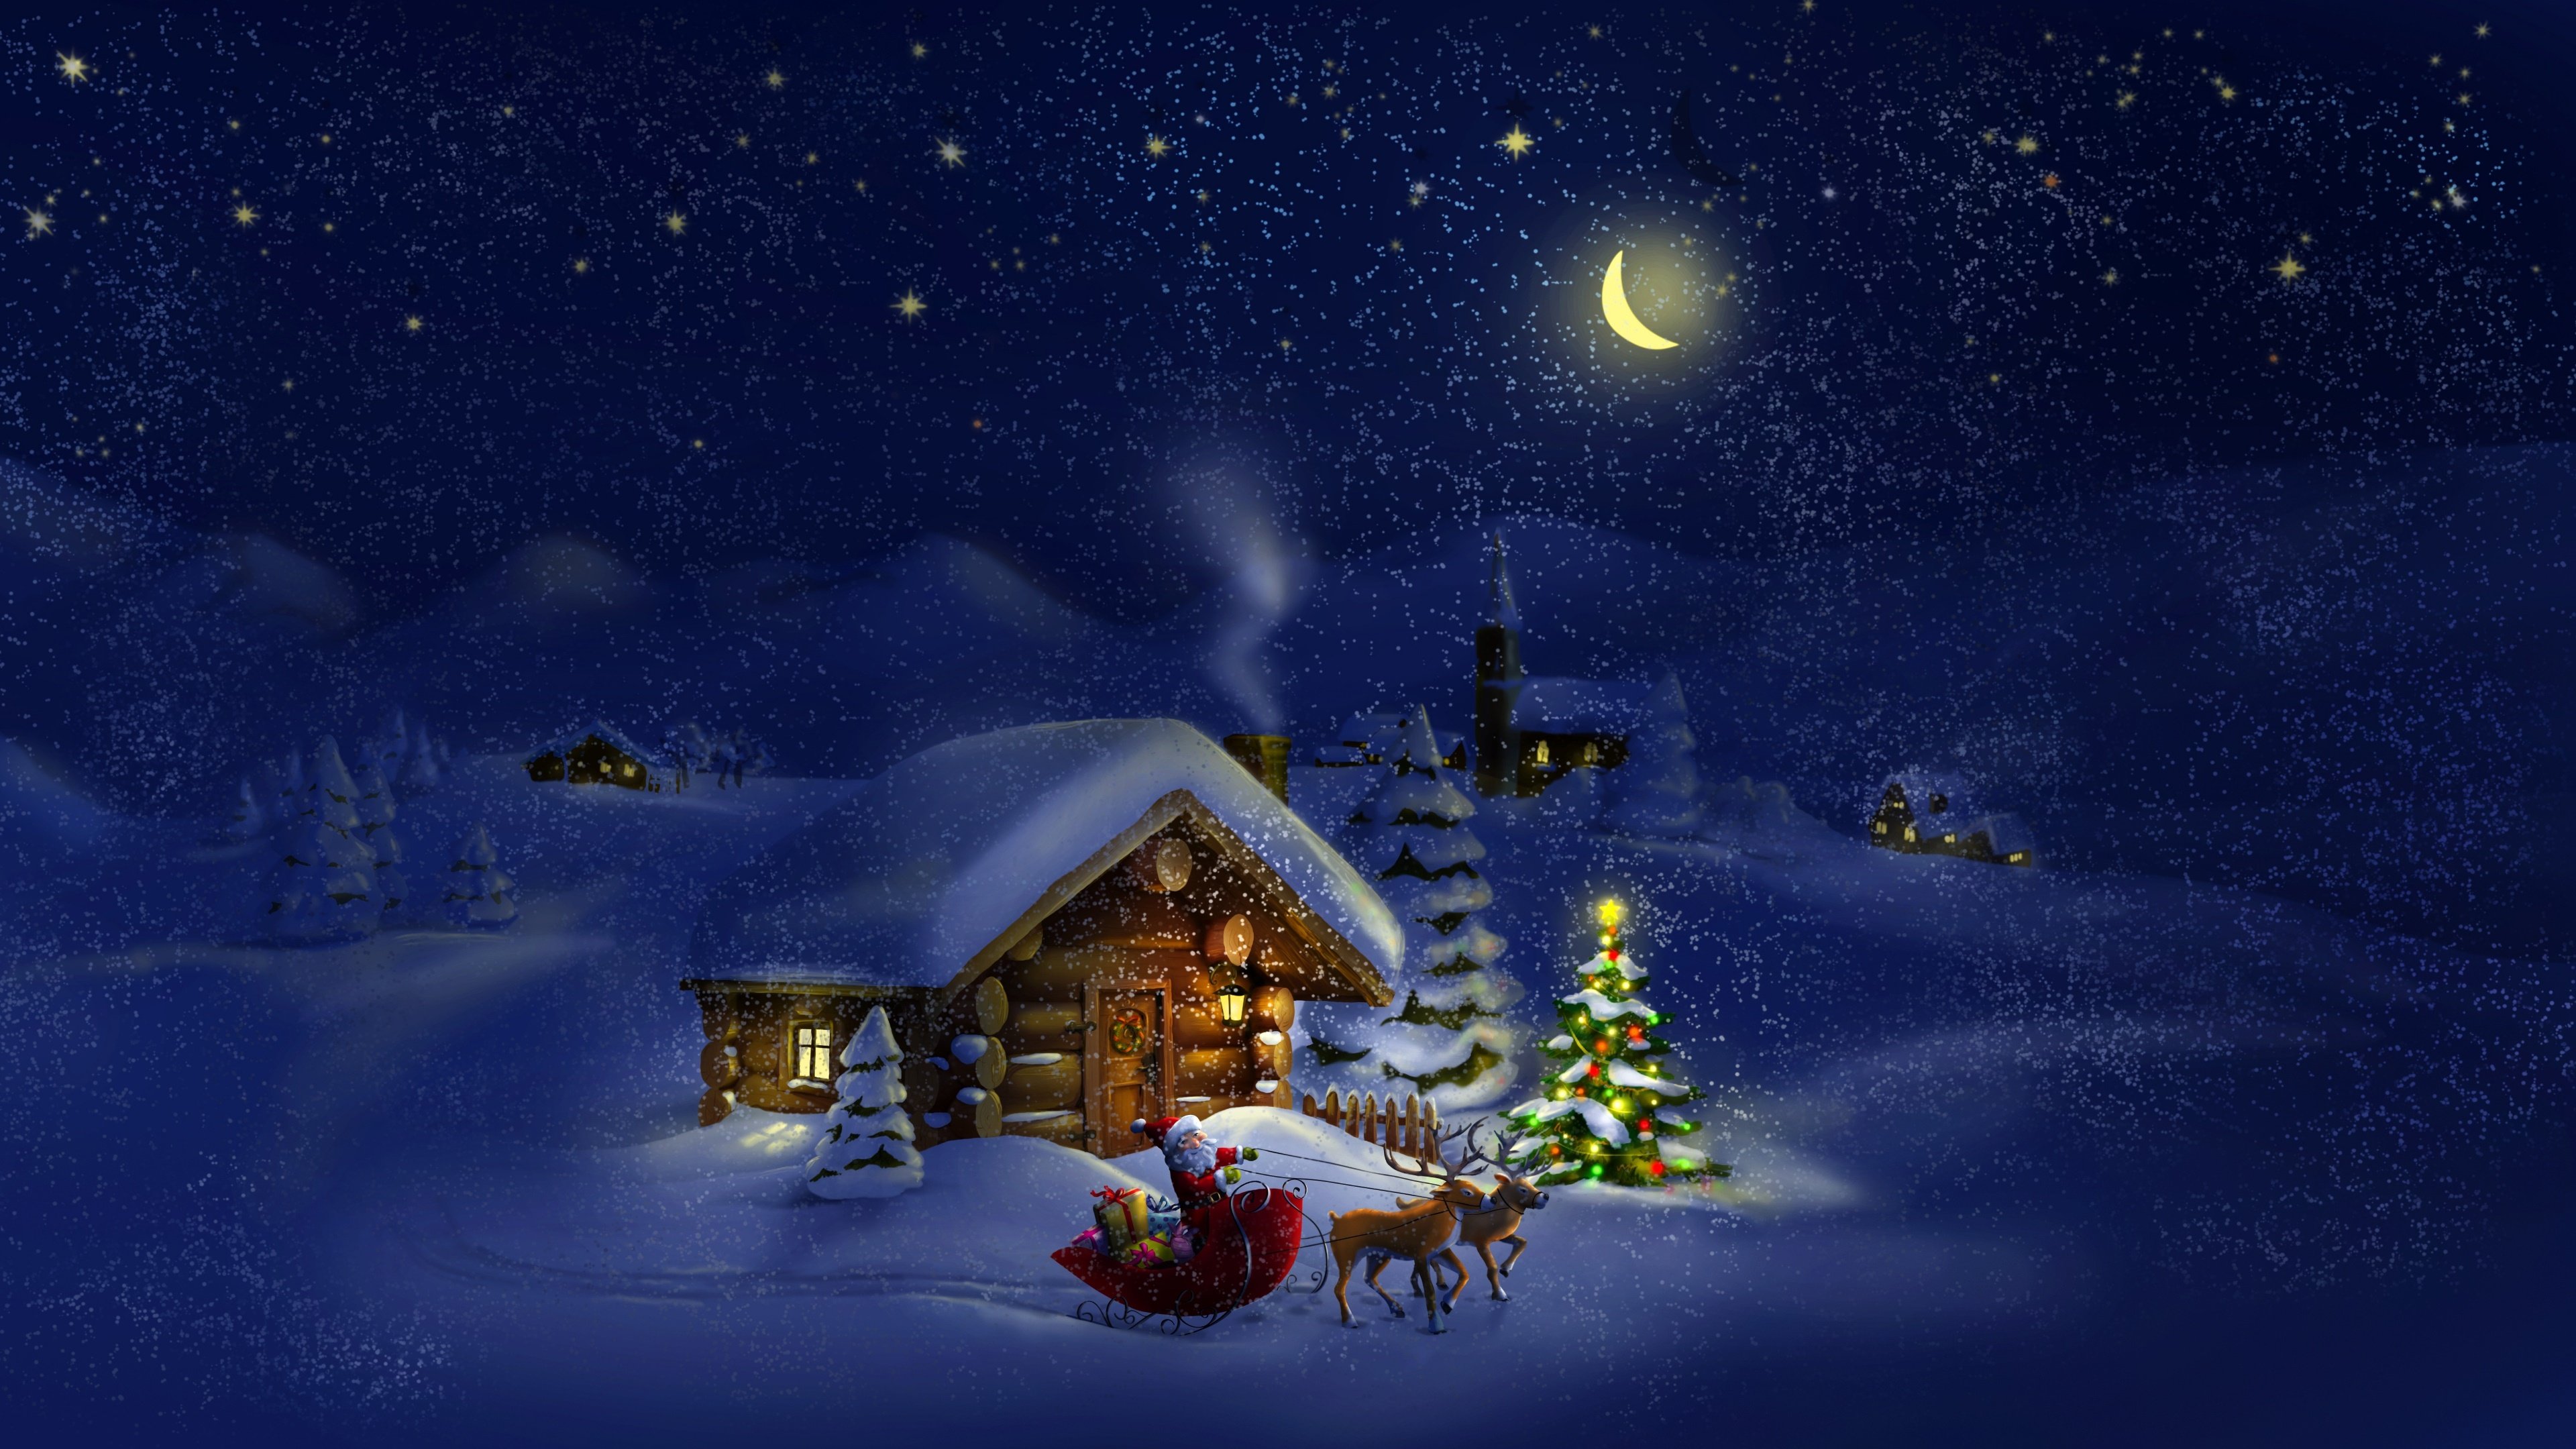 Free download Santa Claus Dreamy Christmas Night 4K Ultra HD Desktop Wallpapers [3840x2160] for your Desktop, Mobile & Tablet